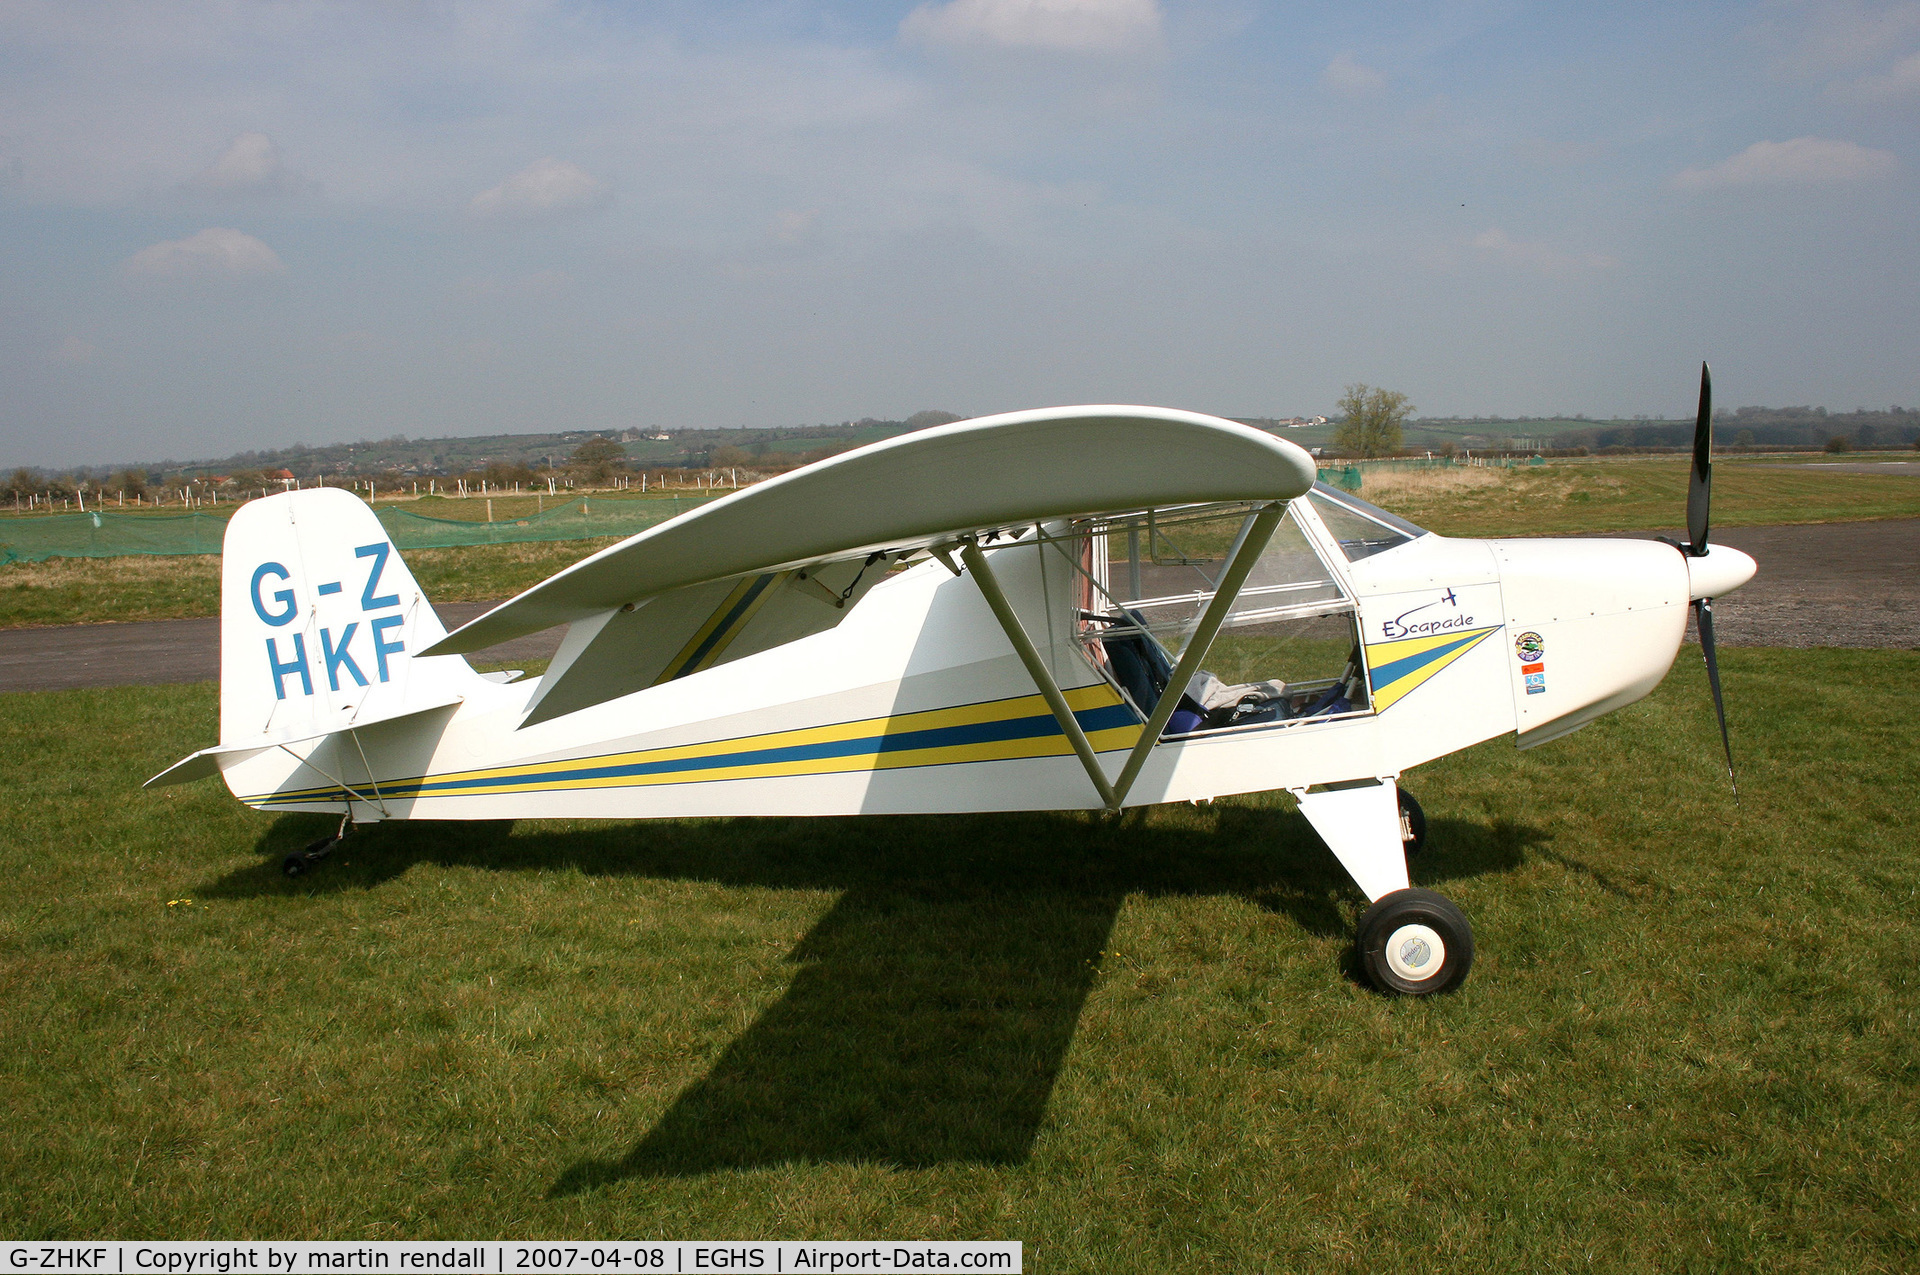 G-ZHKF, 2004 Escapade 912(2) C/N BMAA/HB/415, ESCAPADE